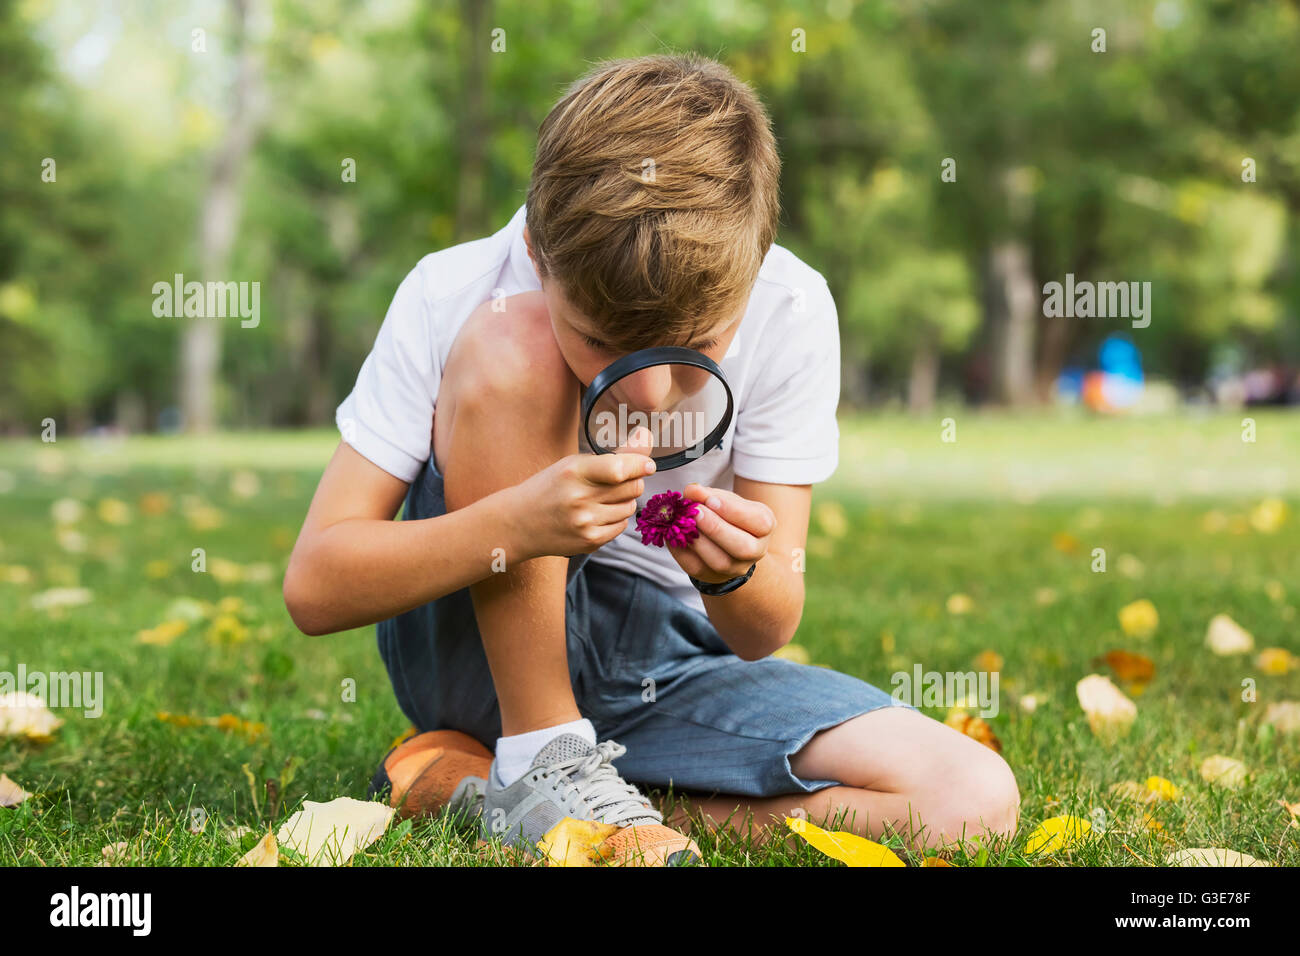 A young boy using a magnifying glass in a park; Edmonton, Alberta, Canada Stock Photo